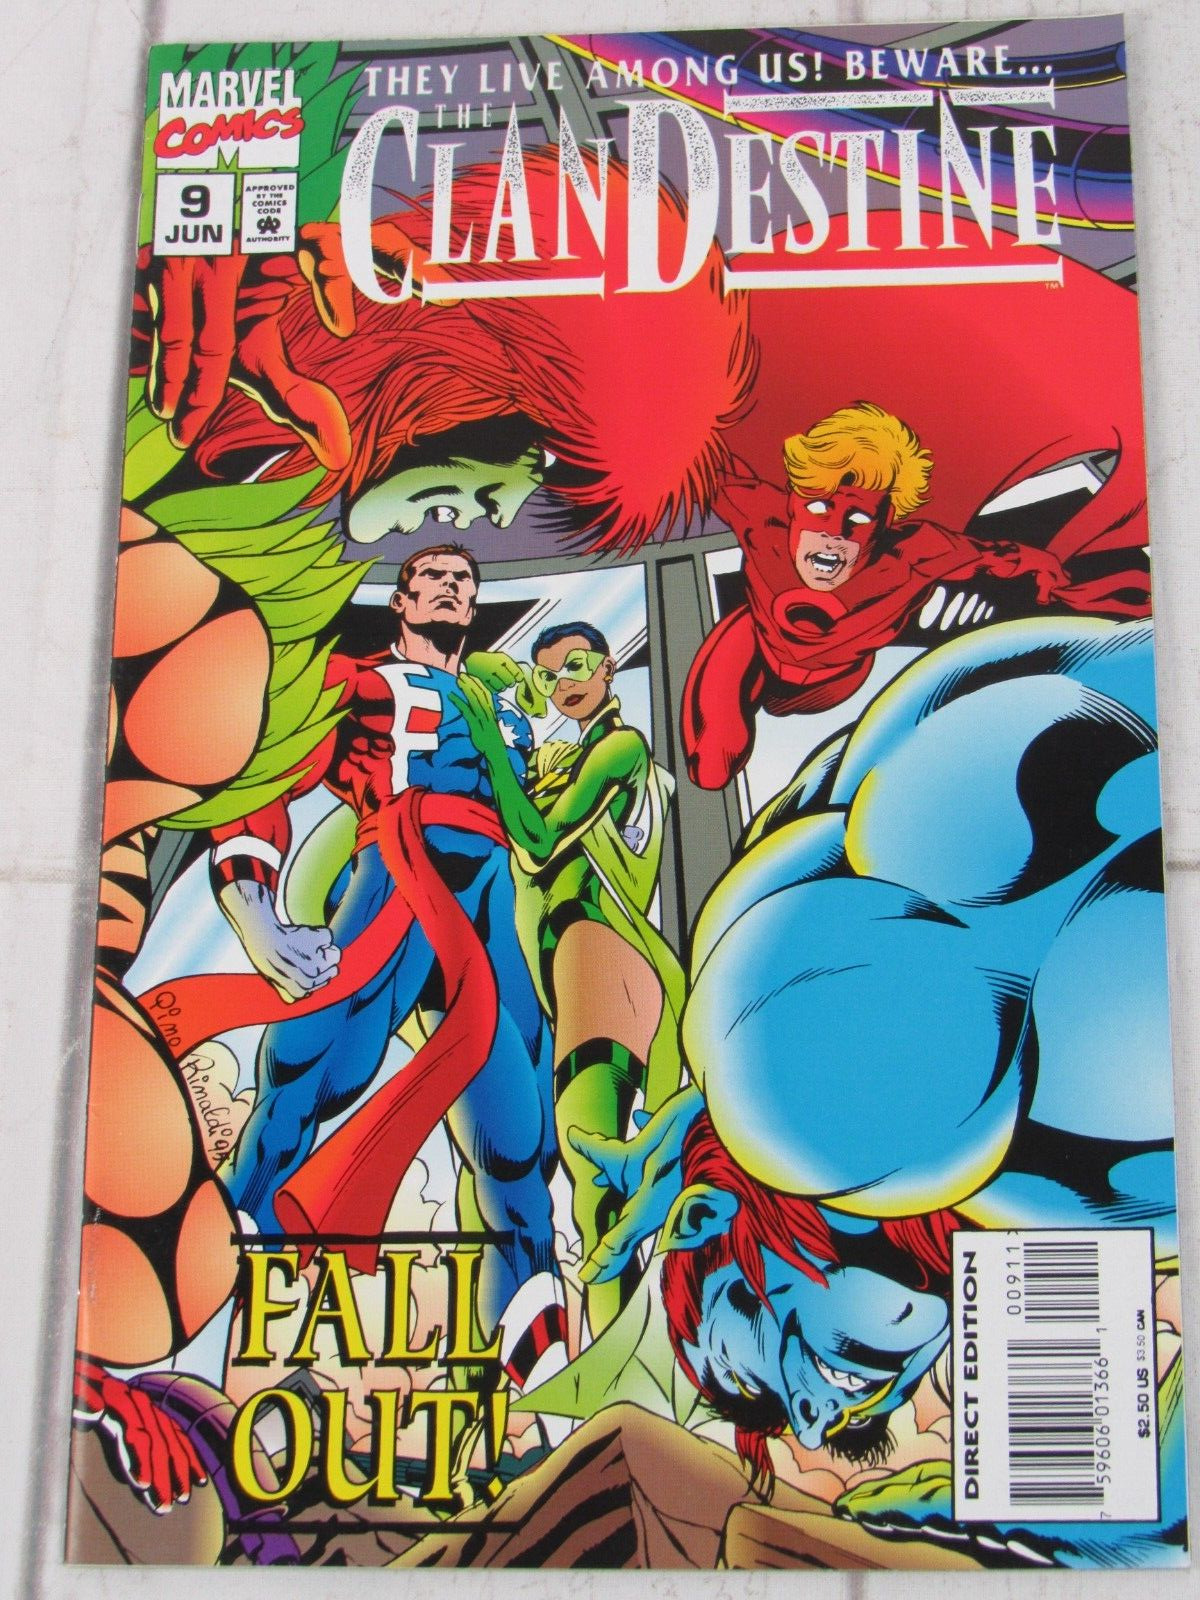 ClanDestine #9 June 1995 Marvel Comics